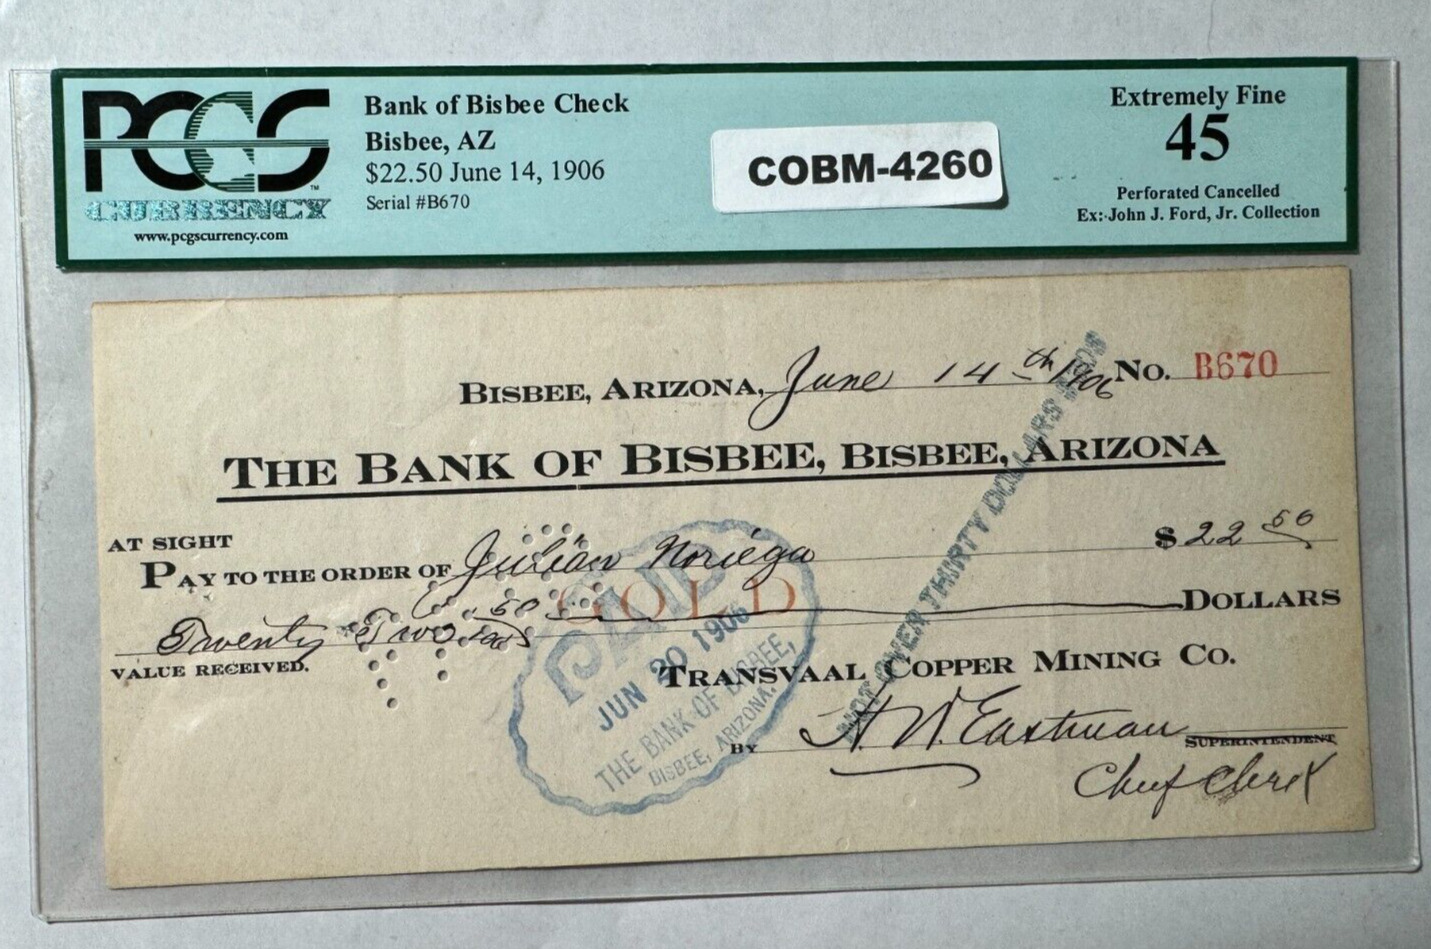 RARE BANK OF BISBEE (Arizona) 1906 Bank Check PCGS Graded Ex. Fine 45 COBM-4260